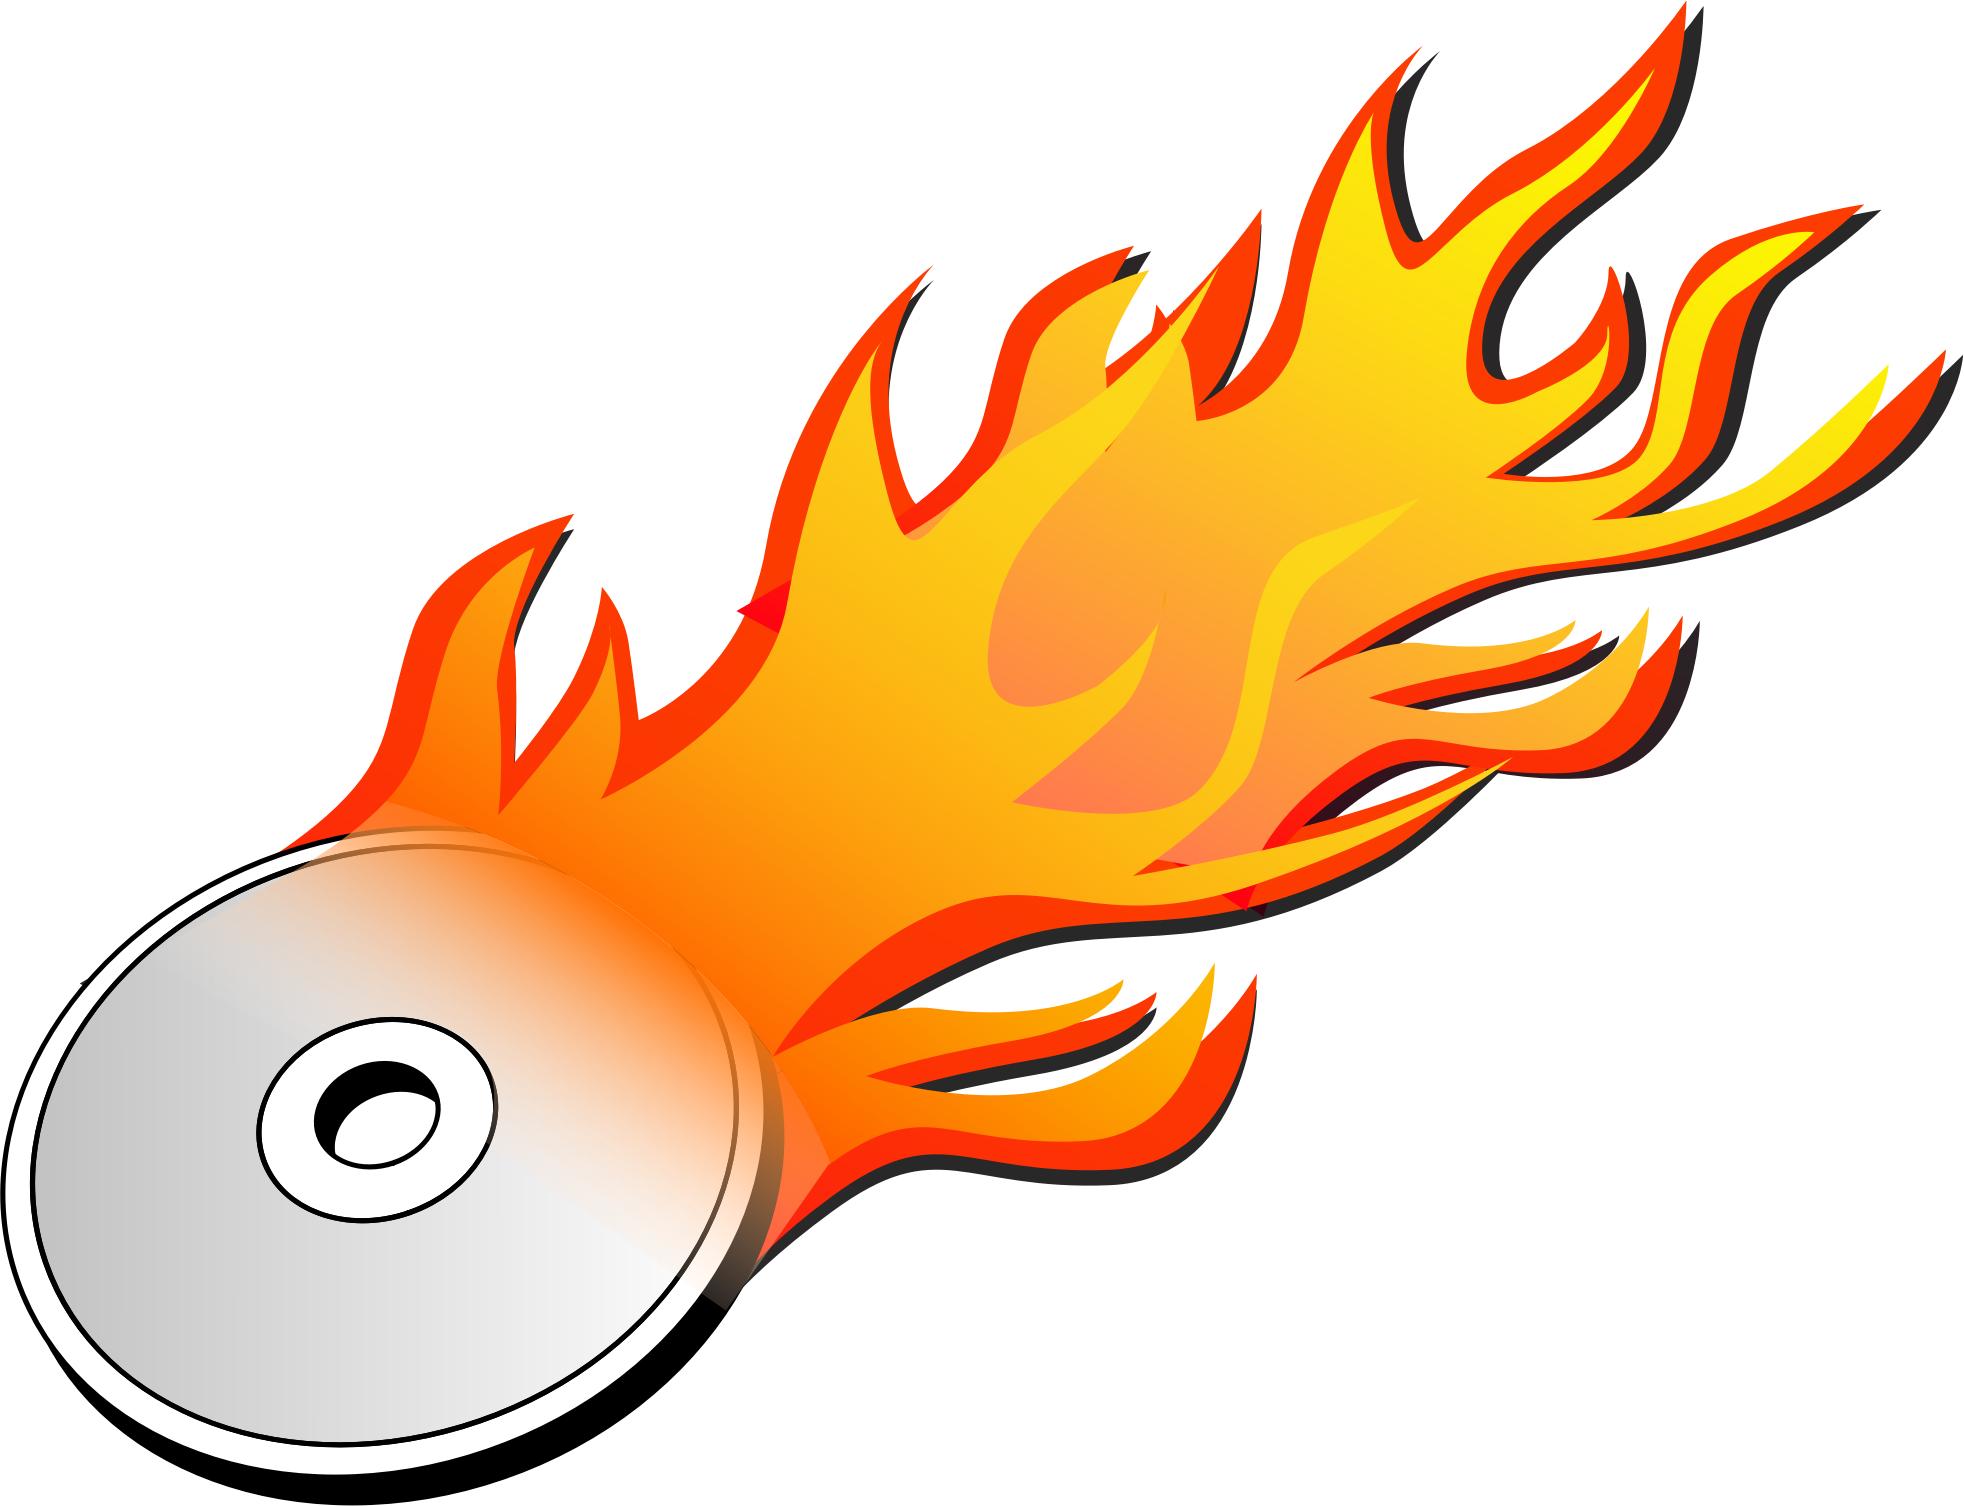 CD/DVD burn png